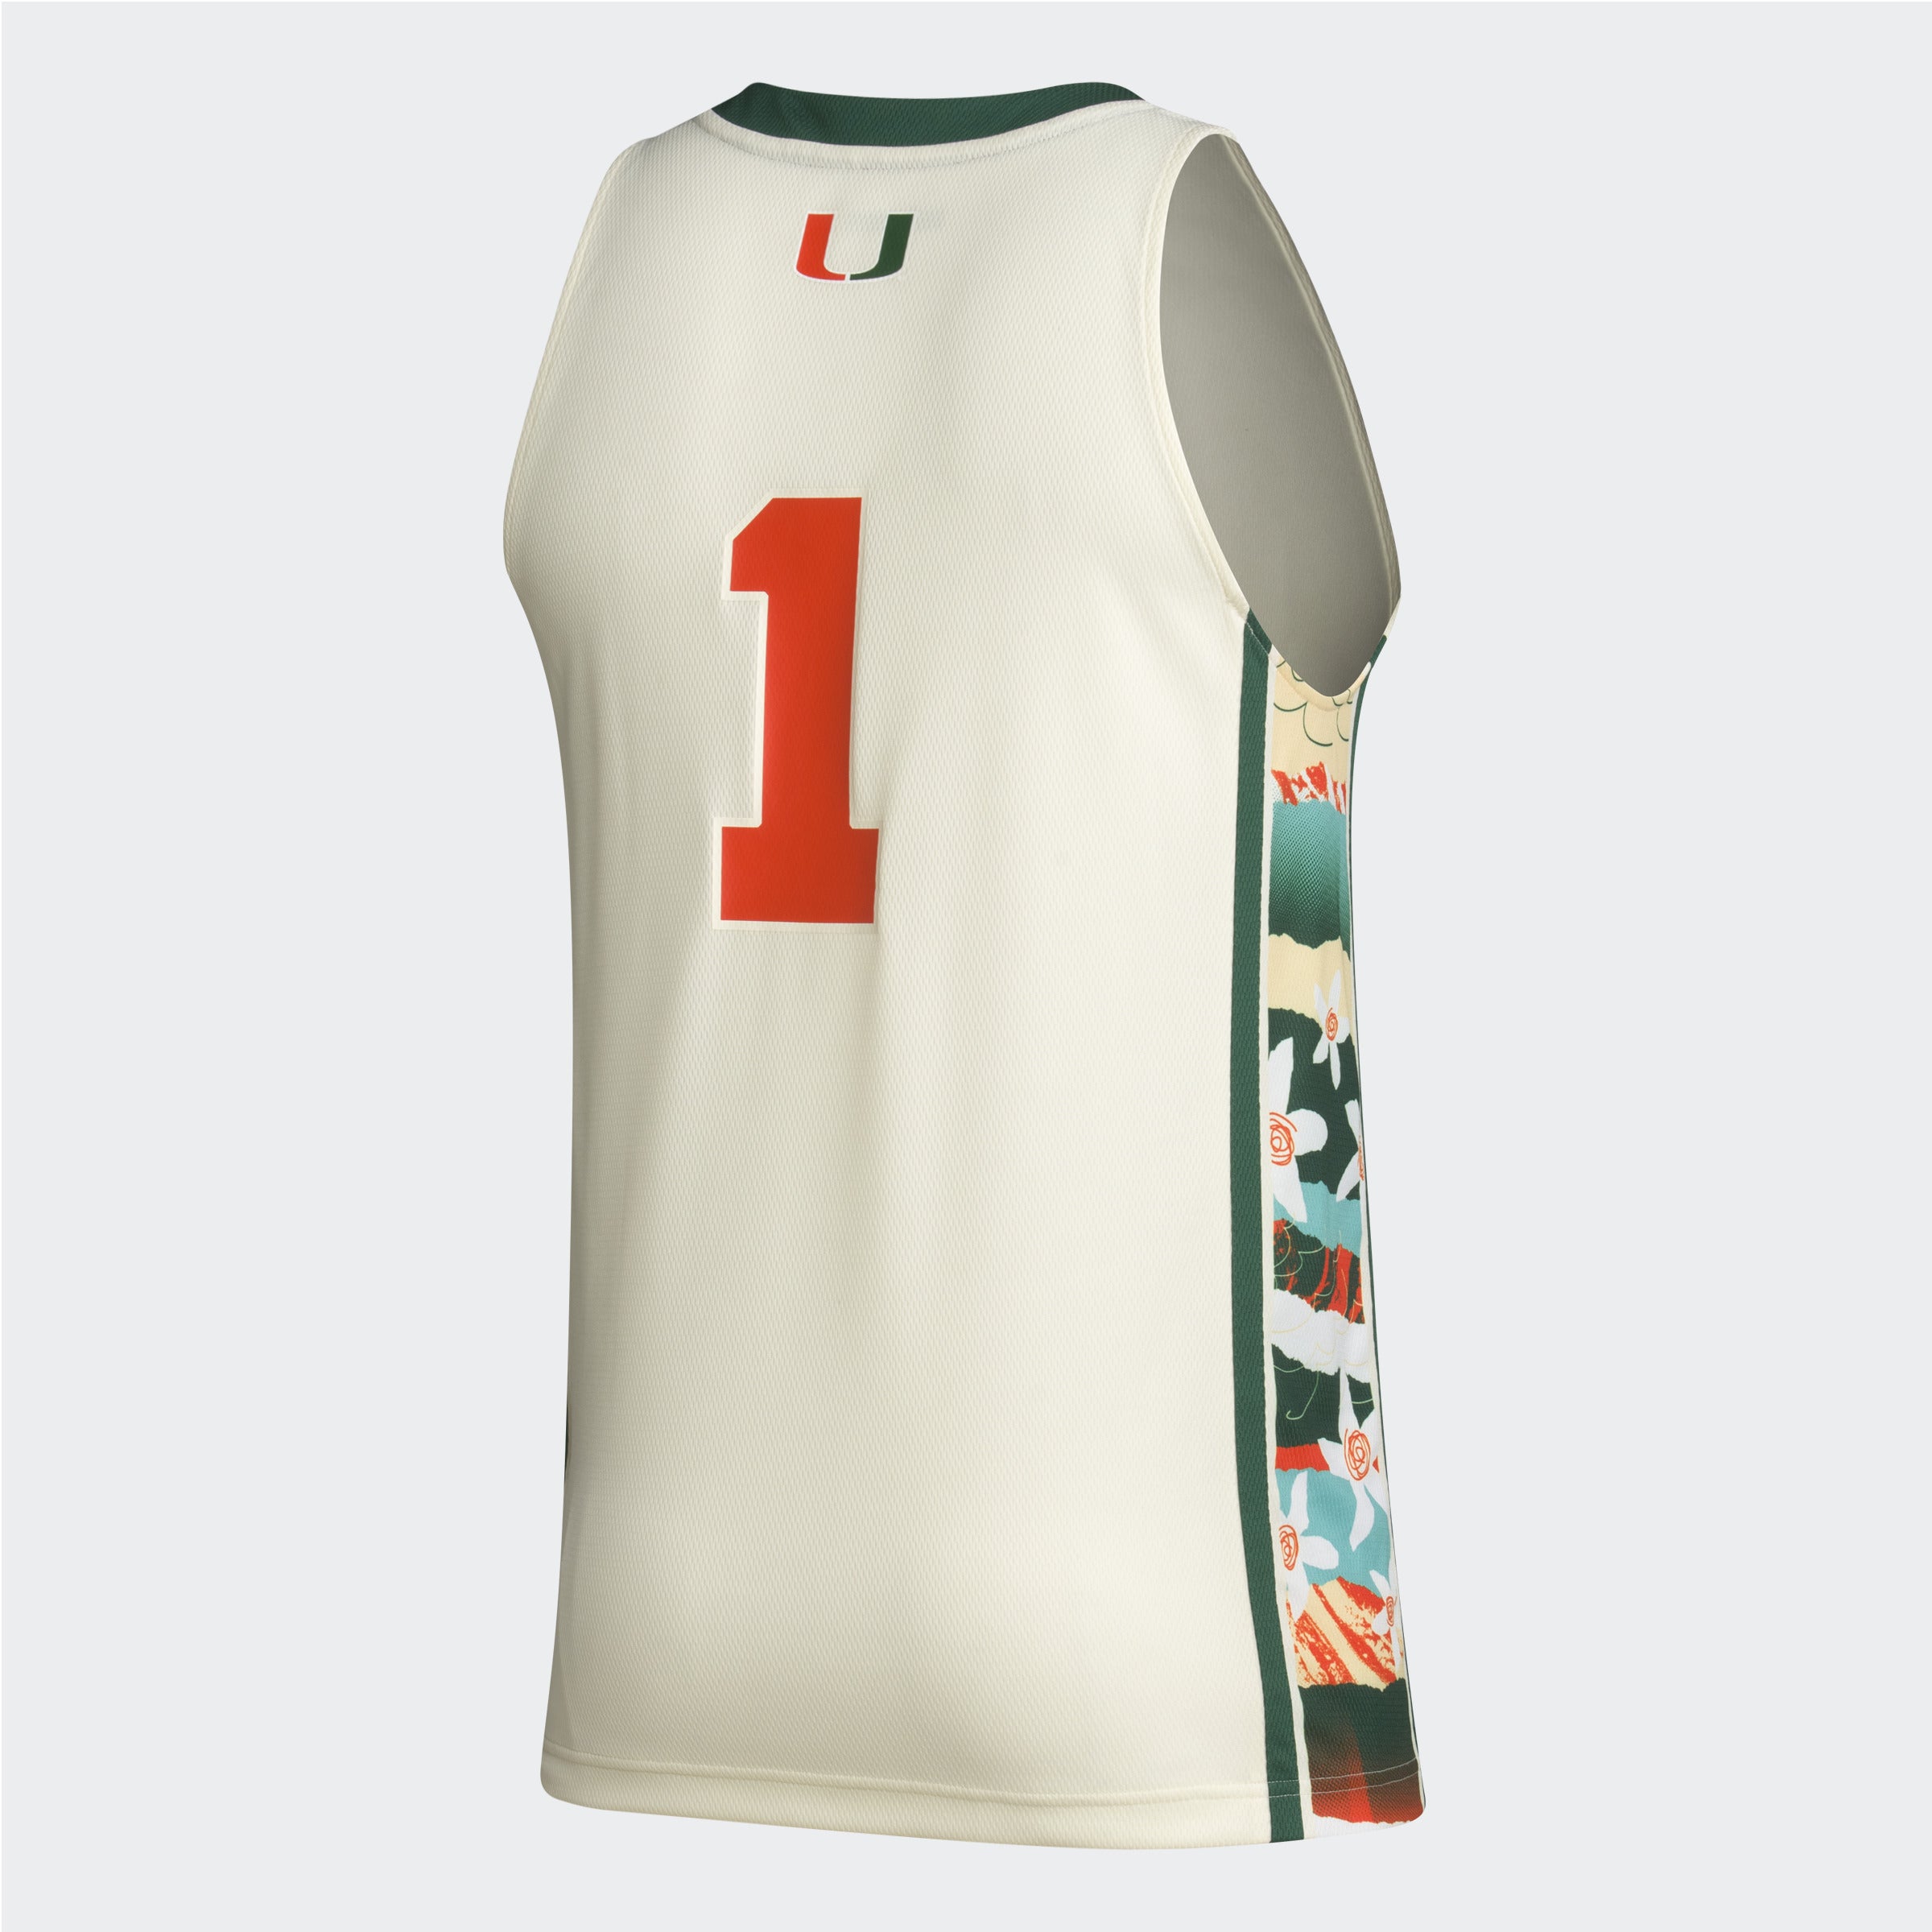 Miami Hurricanes adidas Honoring Black Excellence Replica Basketball Jersey  - White